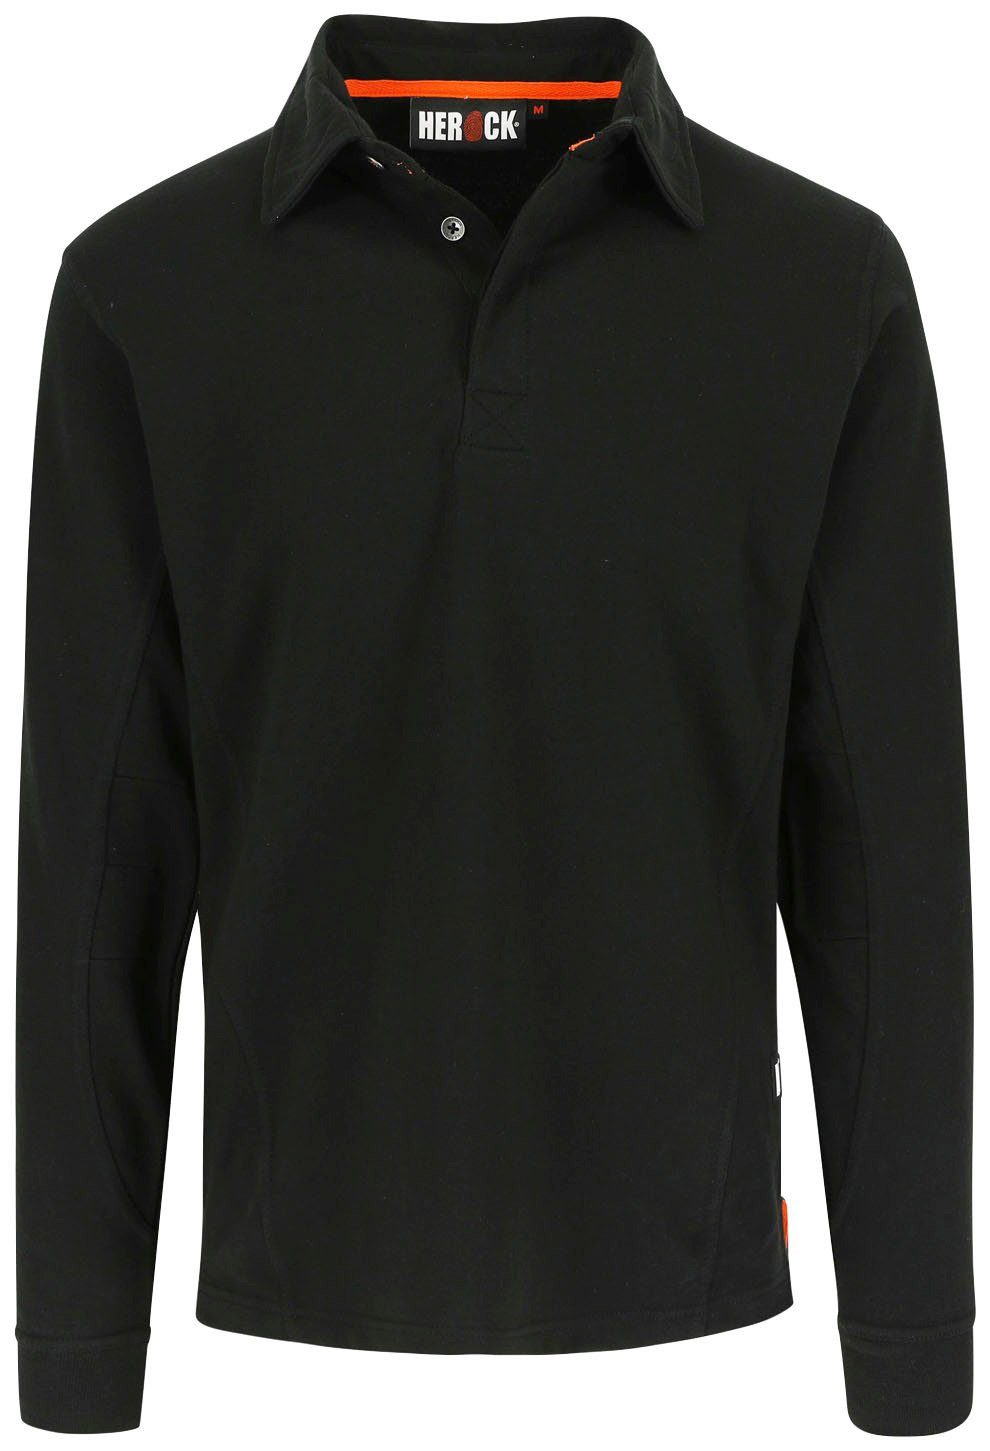 Herock Langarm-Poloshirt Troja Polo figurformend, verschiedene leicht schwarz Tragegefühl, Farben Angenehmes Langärmlig